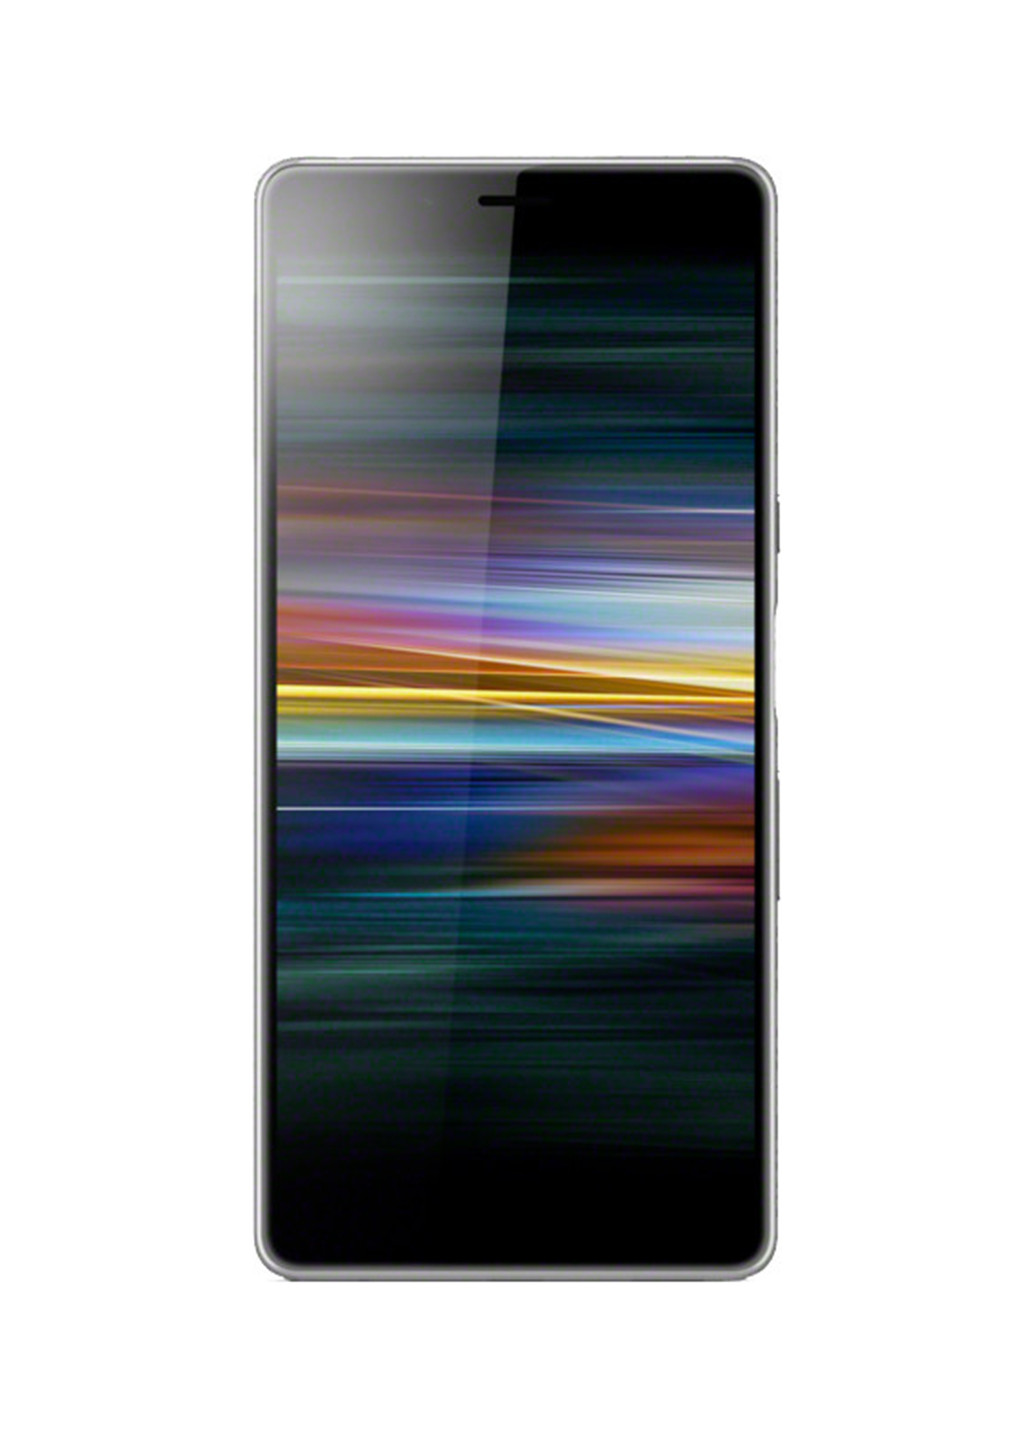 Смартфон Xperia L3 3 / 32GB Silver (I4312) Sony xperia l3 3/32gb silver (i4312) (155433451)